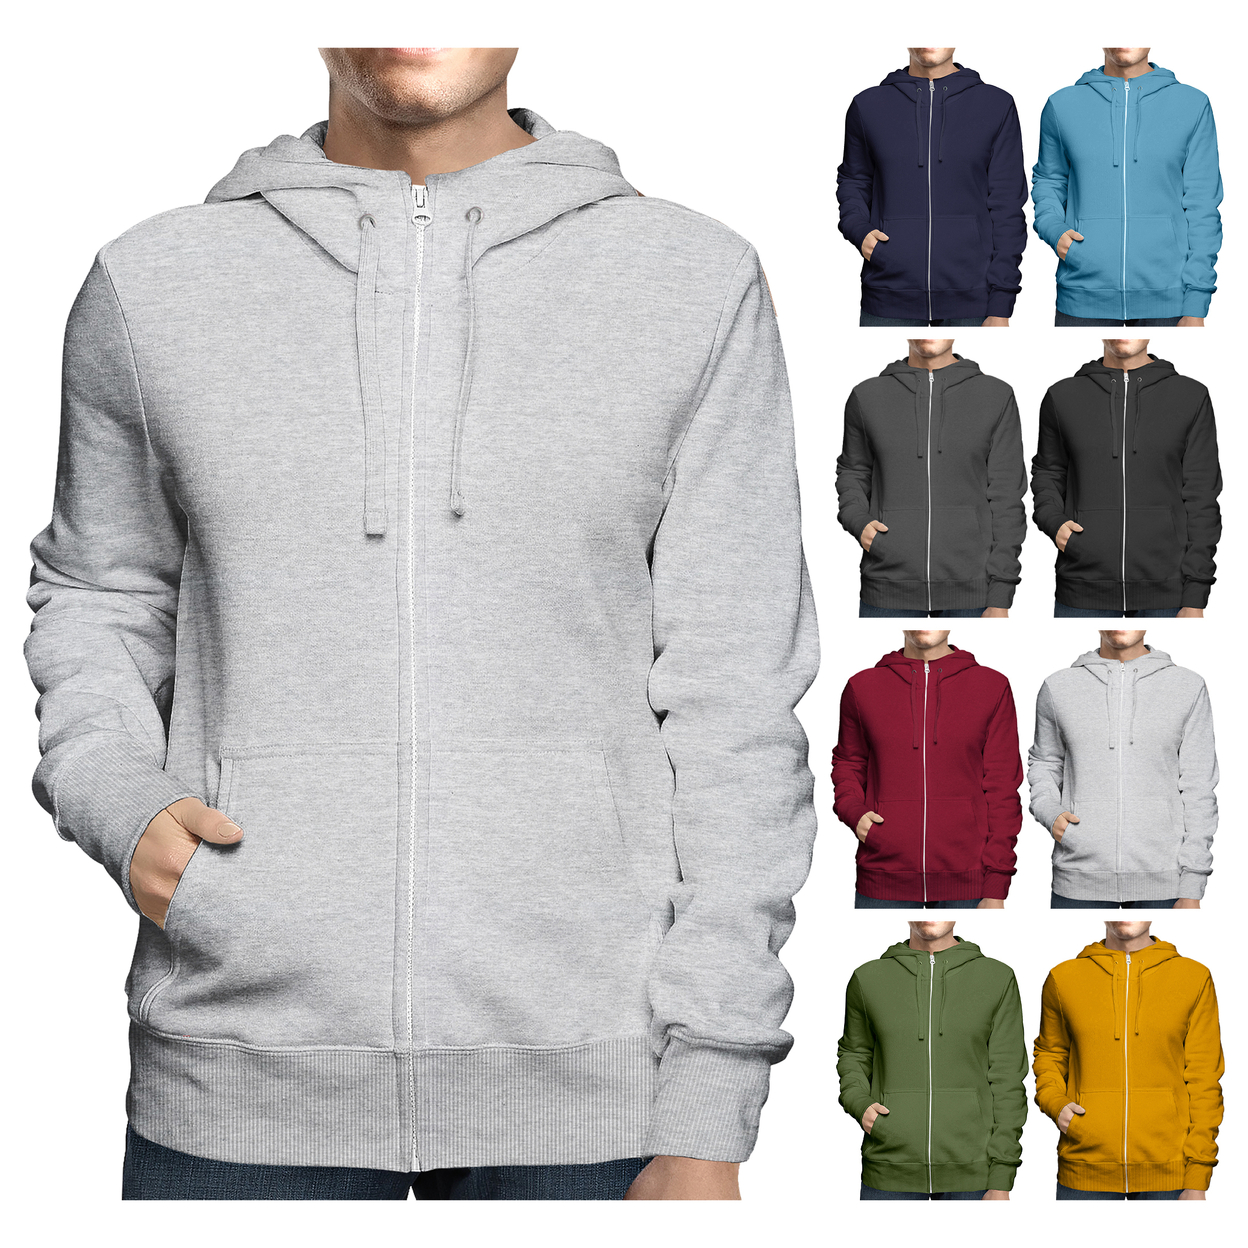 2-Pack: Men's Winter Warm Soft Full Zip-Up Fleece Lined Hoodie Sweatshirt - Black & Black, Large